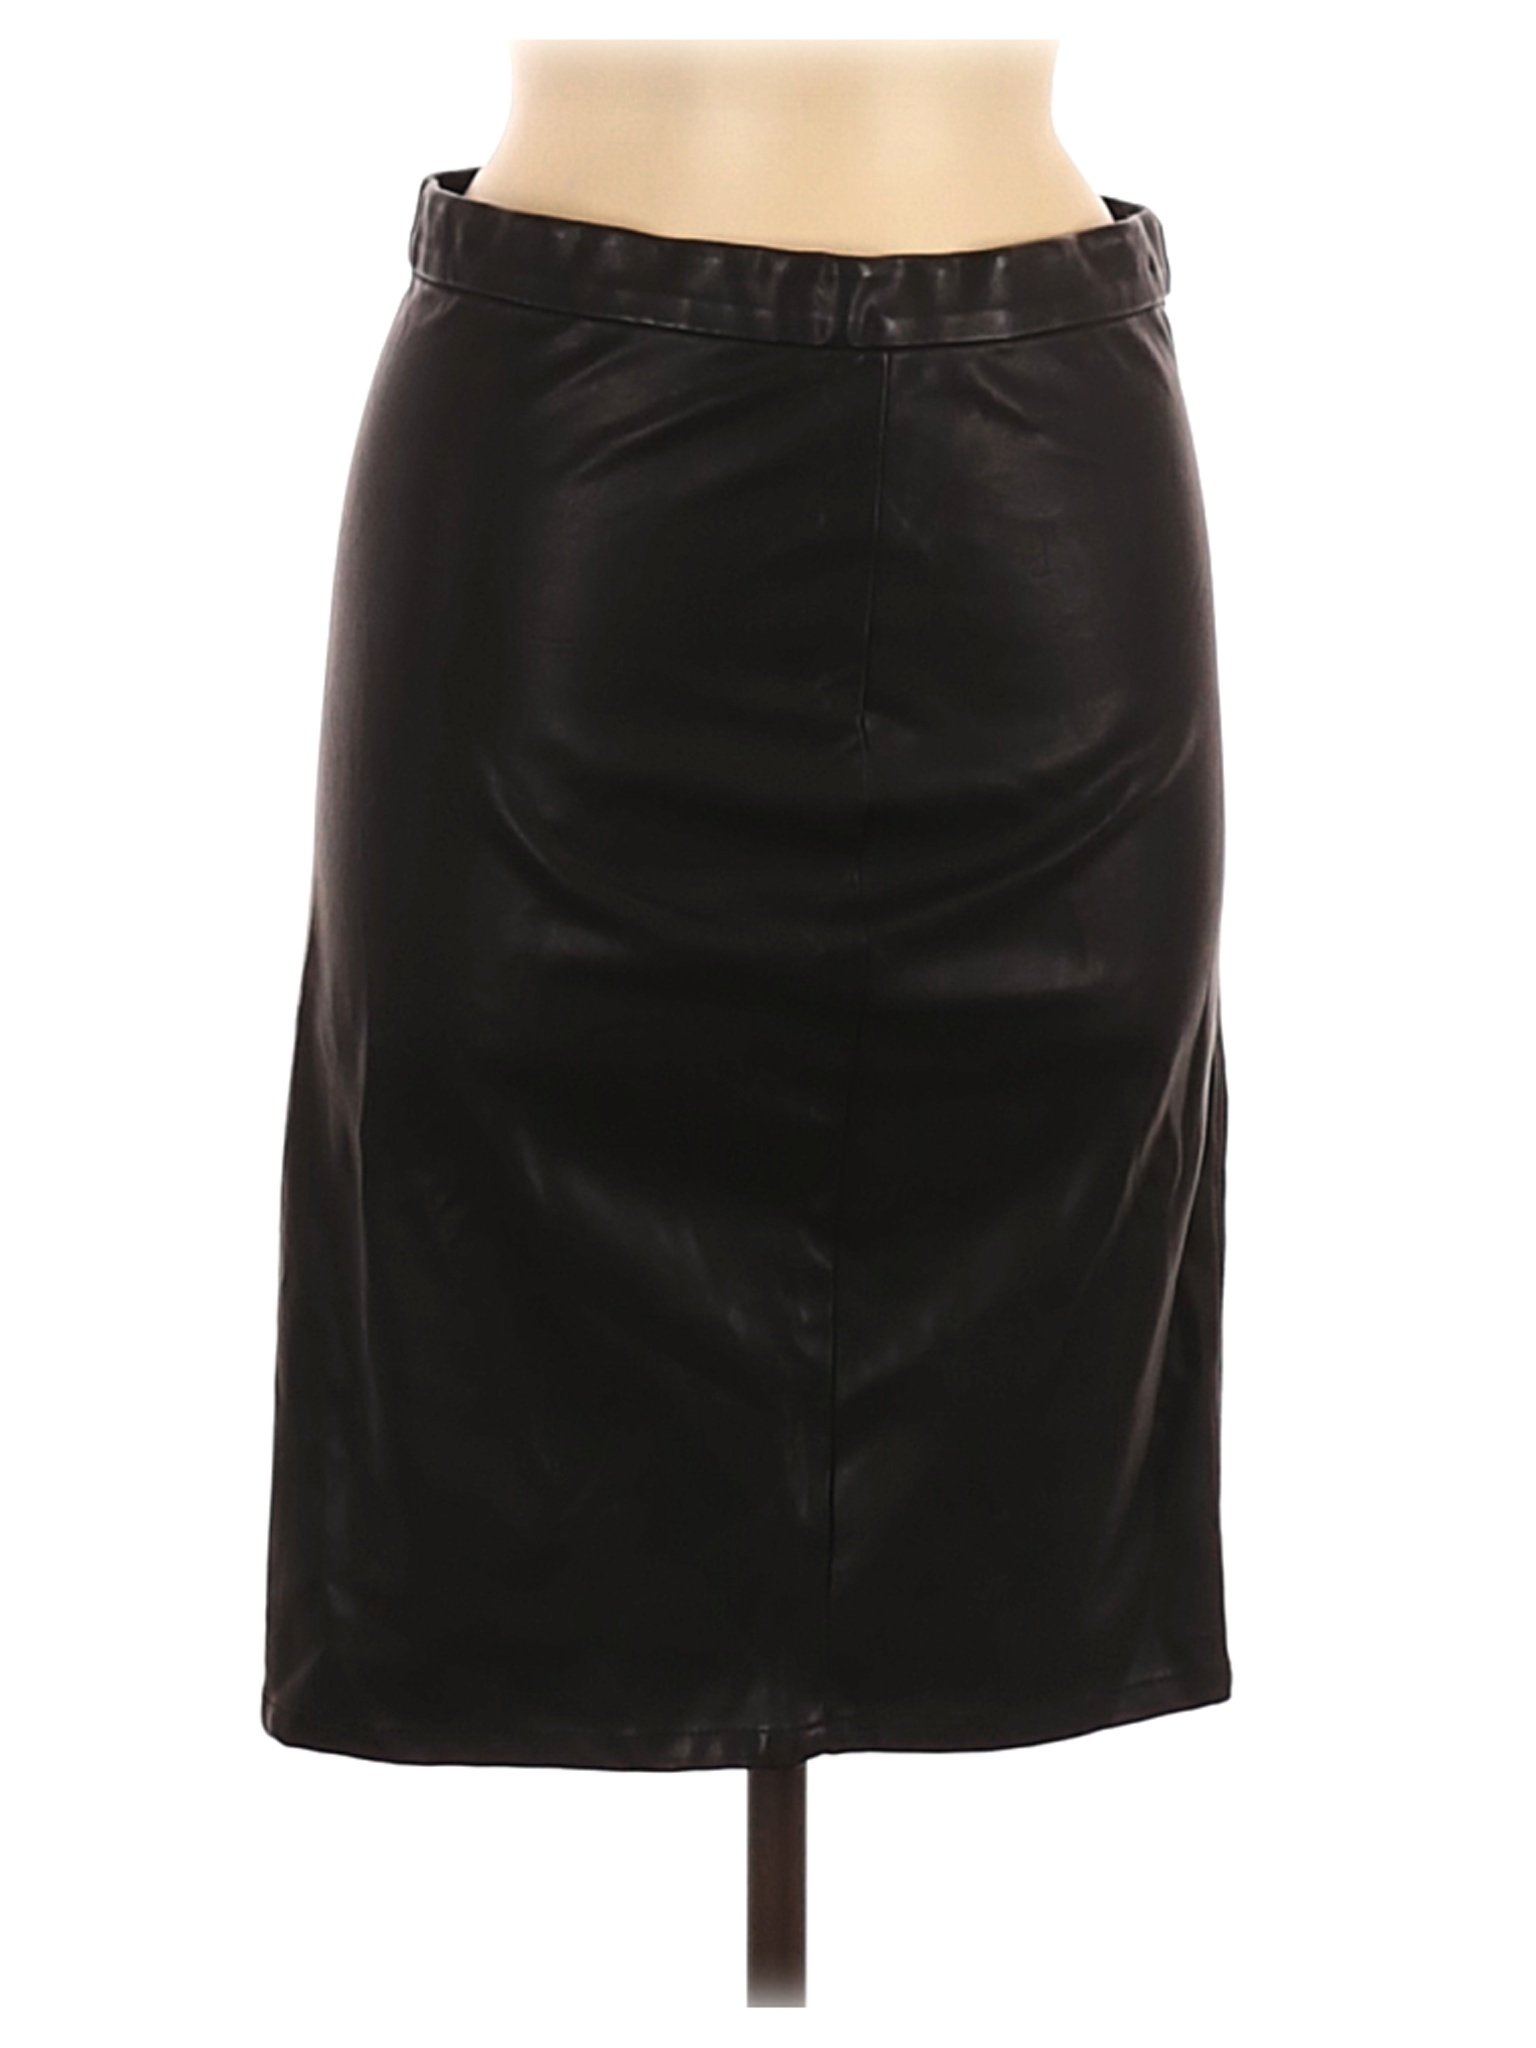 NWT Blank NYC Women Black Faux Leather Skirt 28W | eBay